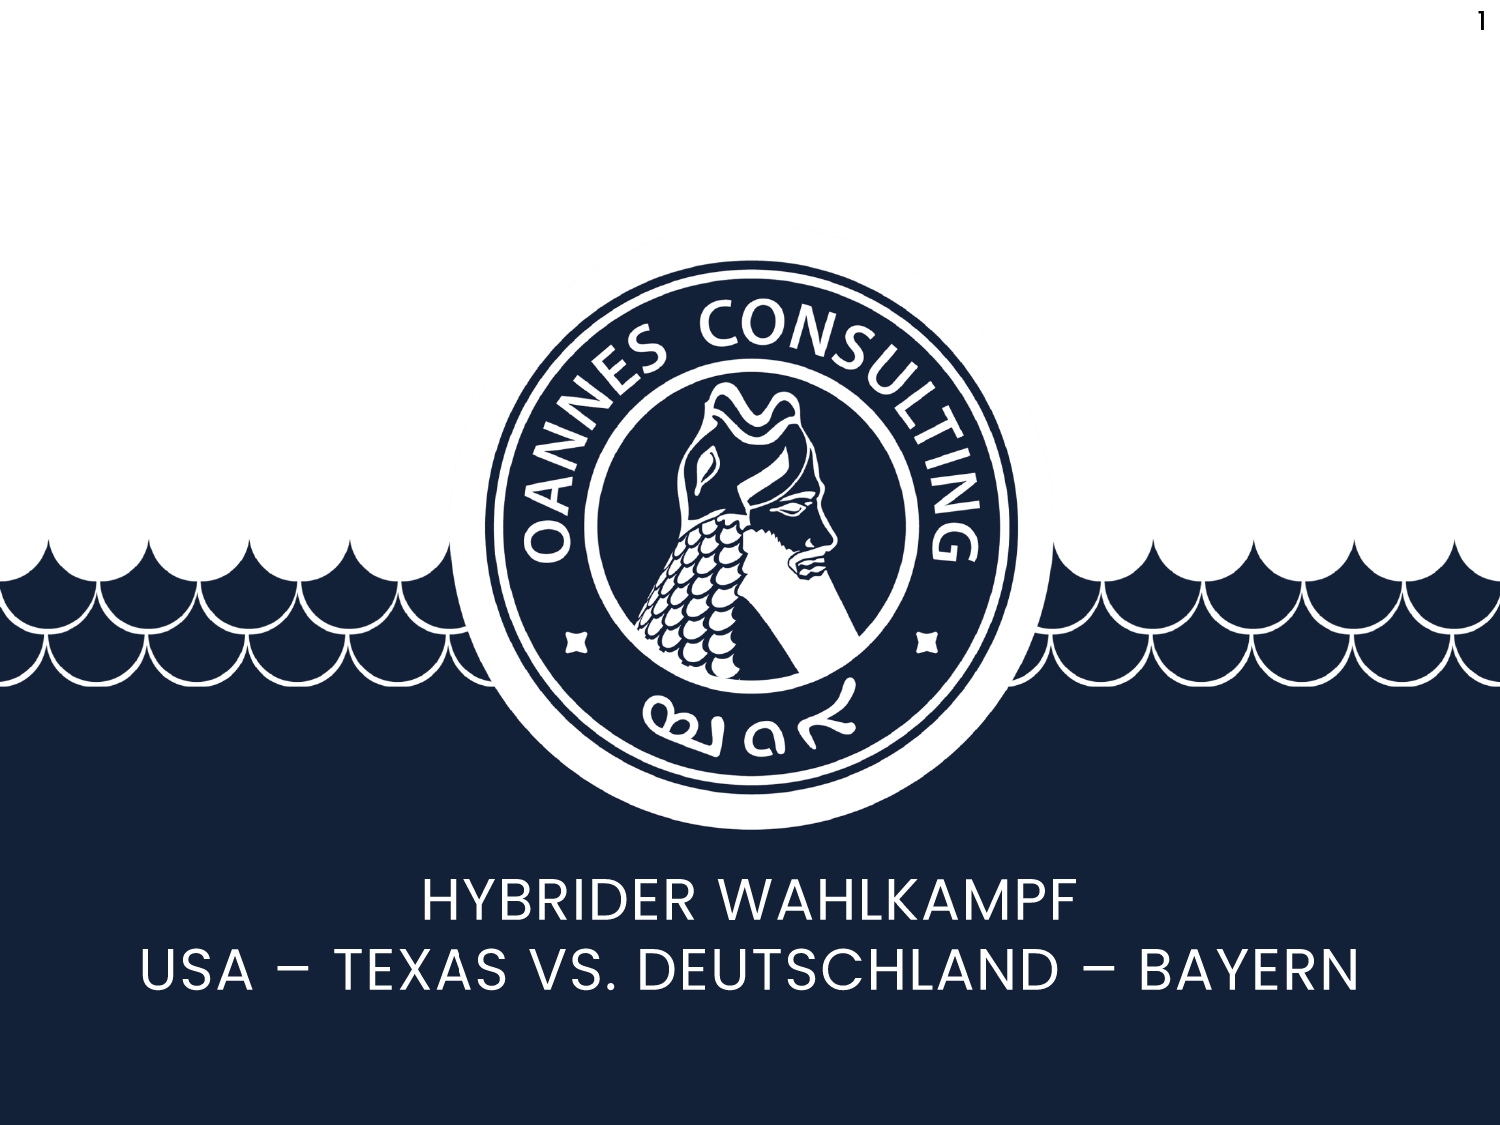 Hybrider Wahlkampf - Texas vs. Bayern 2013 - 2021